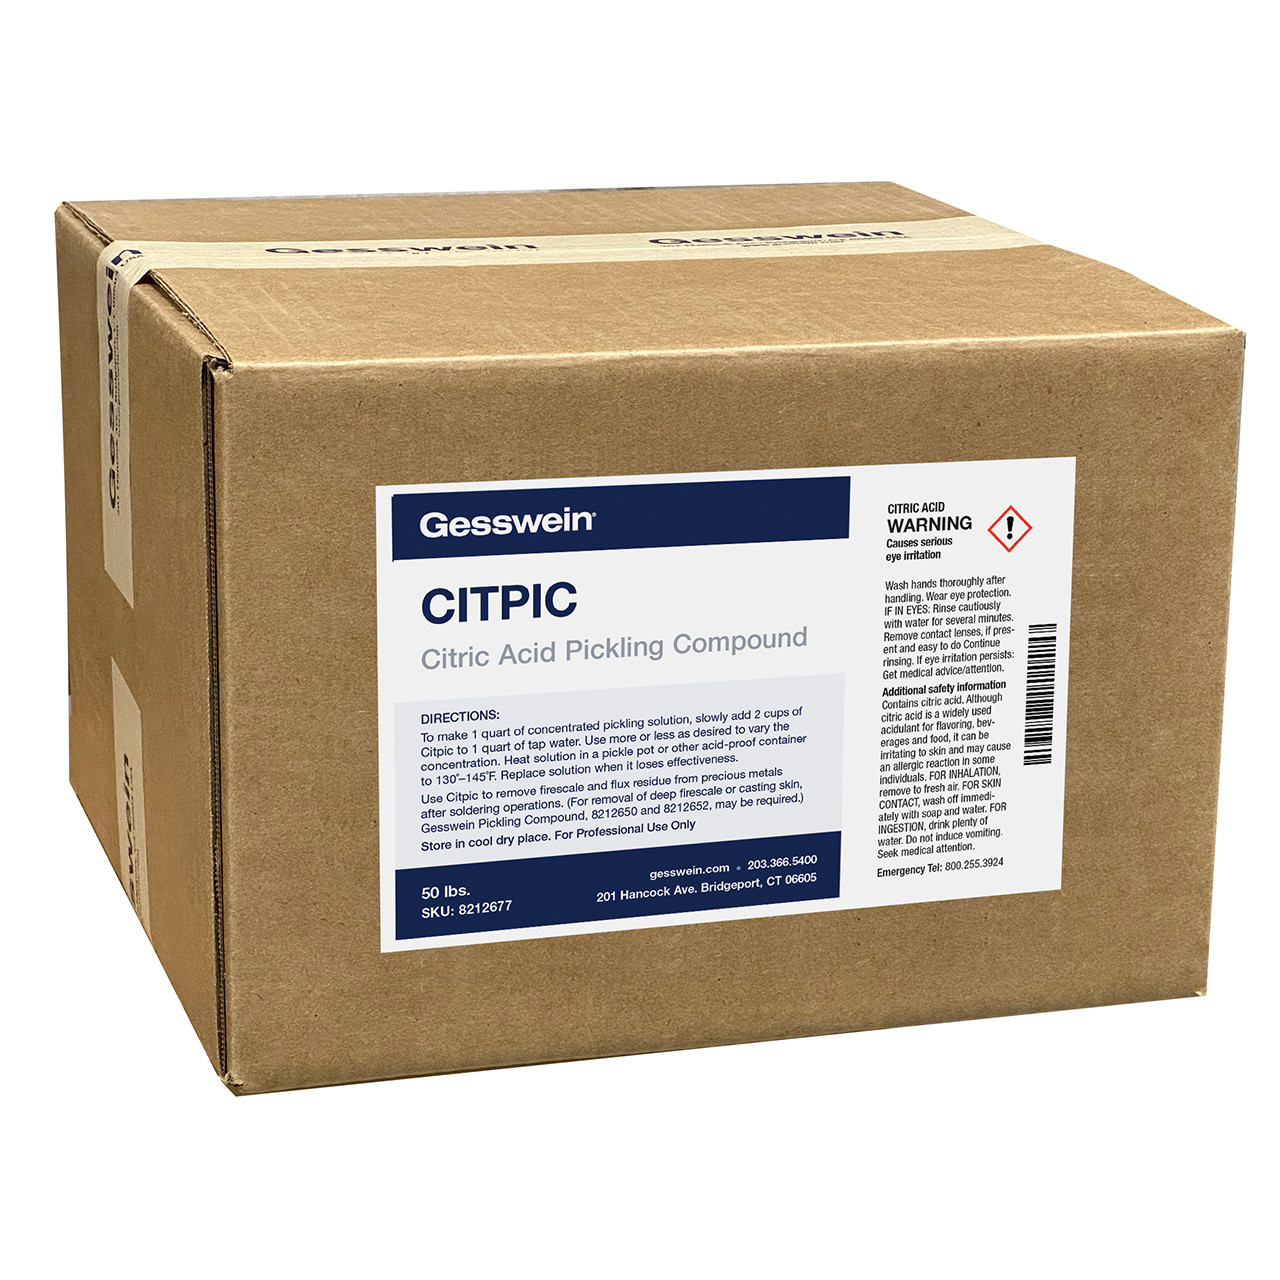 Citric Acid Pickling Compound - 50 lb. Box